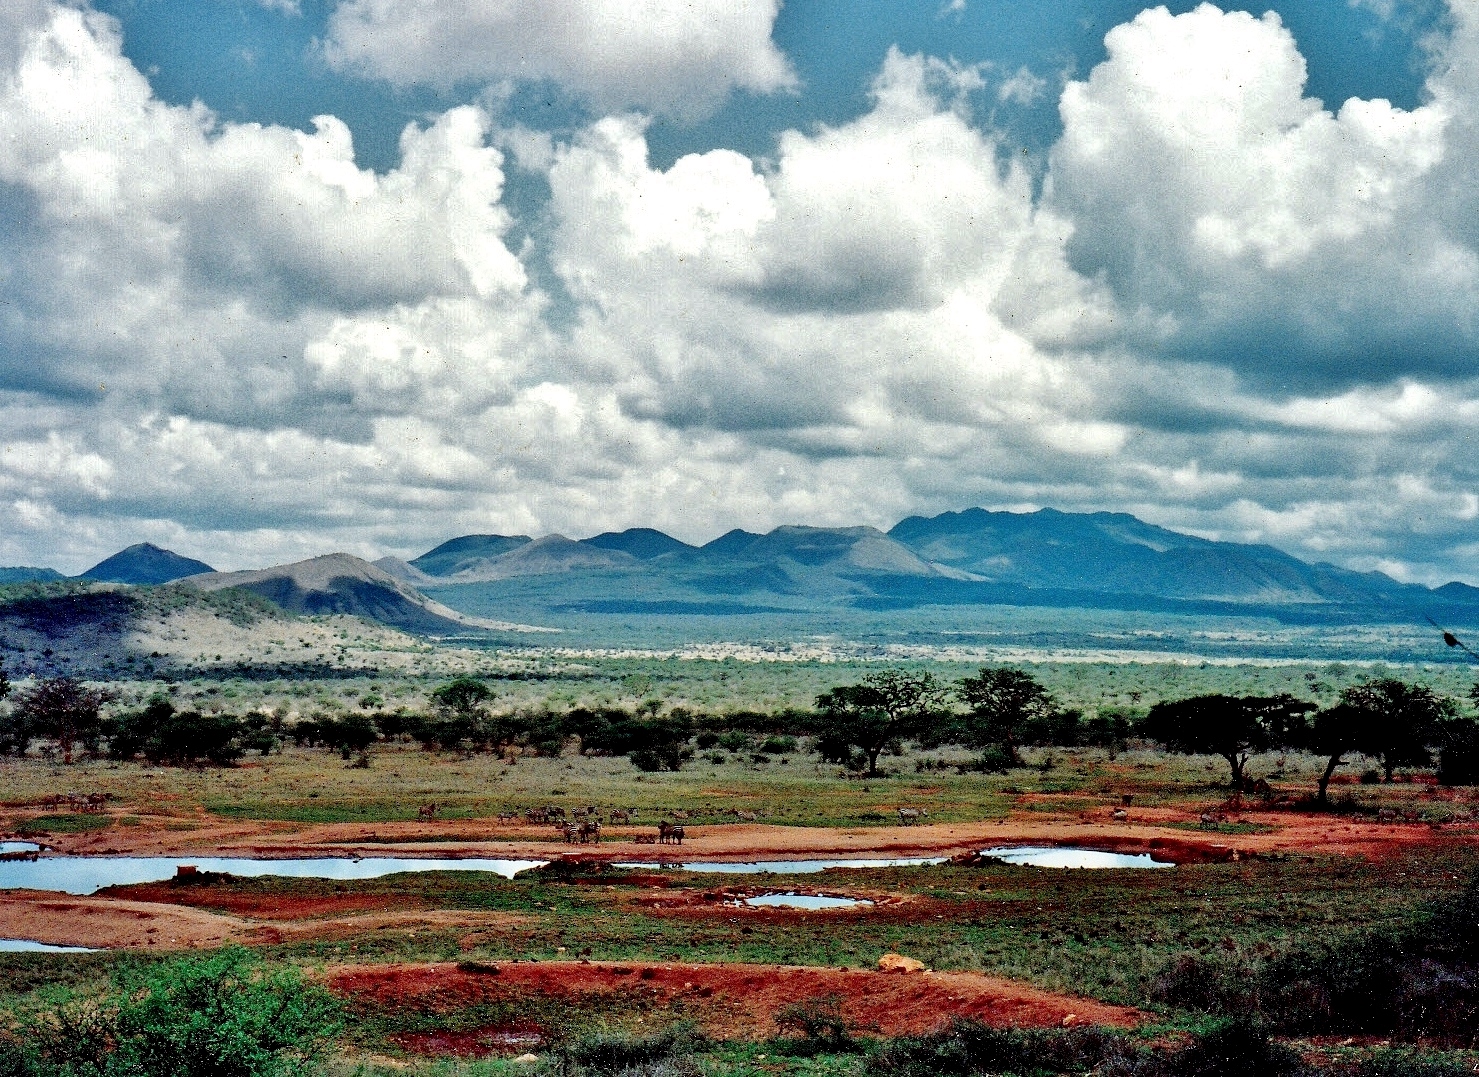 Tsavo West National Park (Photo: tishfarrell.com)